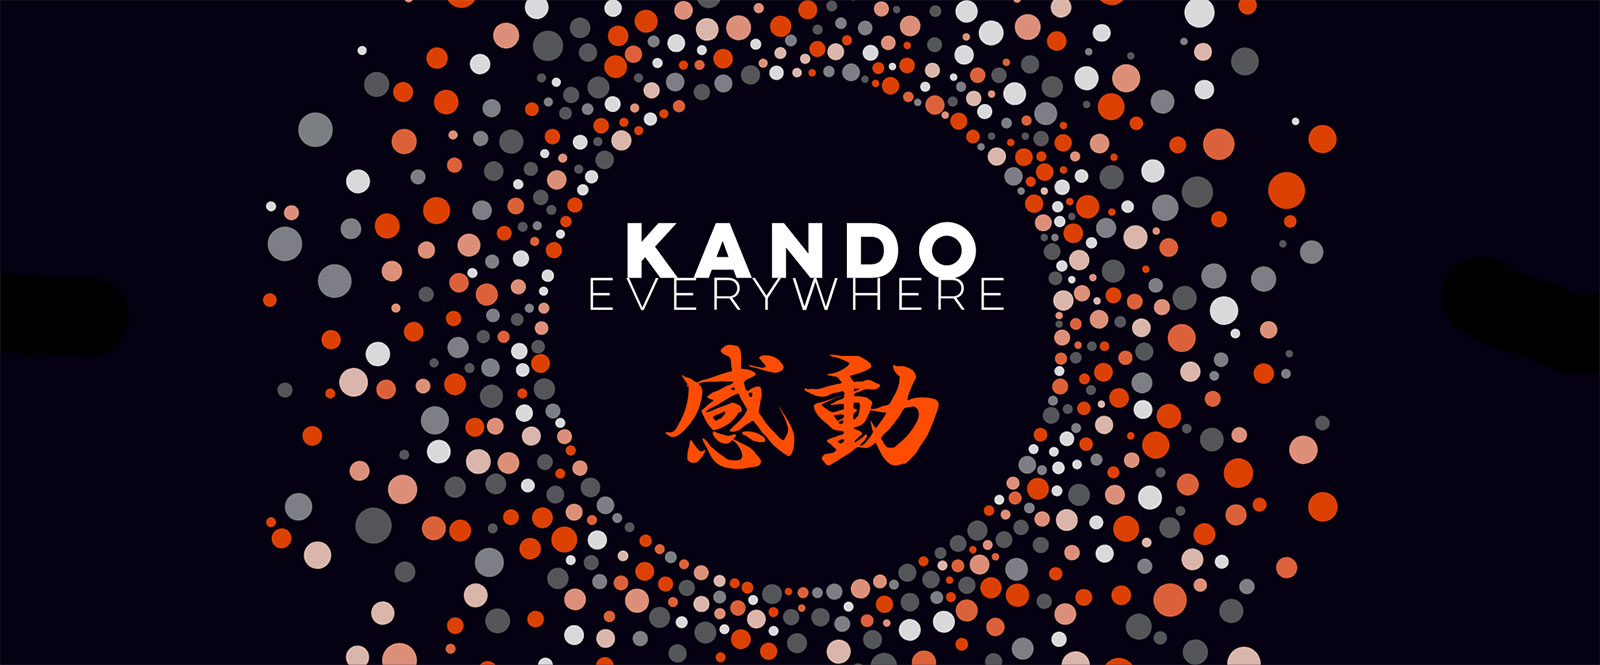 Sony Kando Everywhere 2020